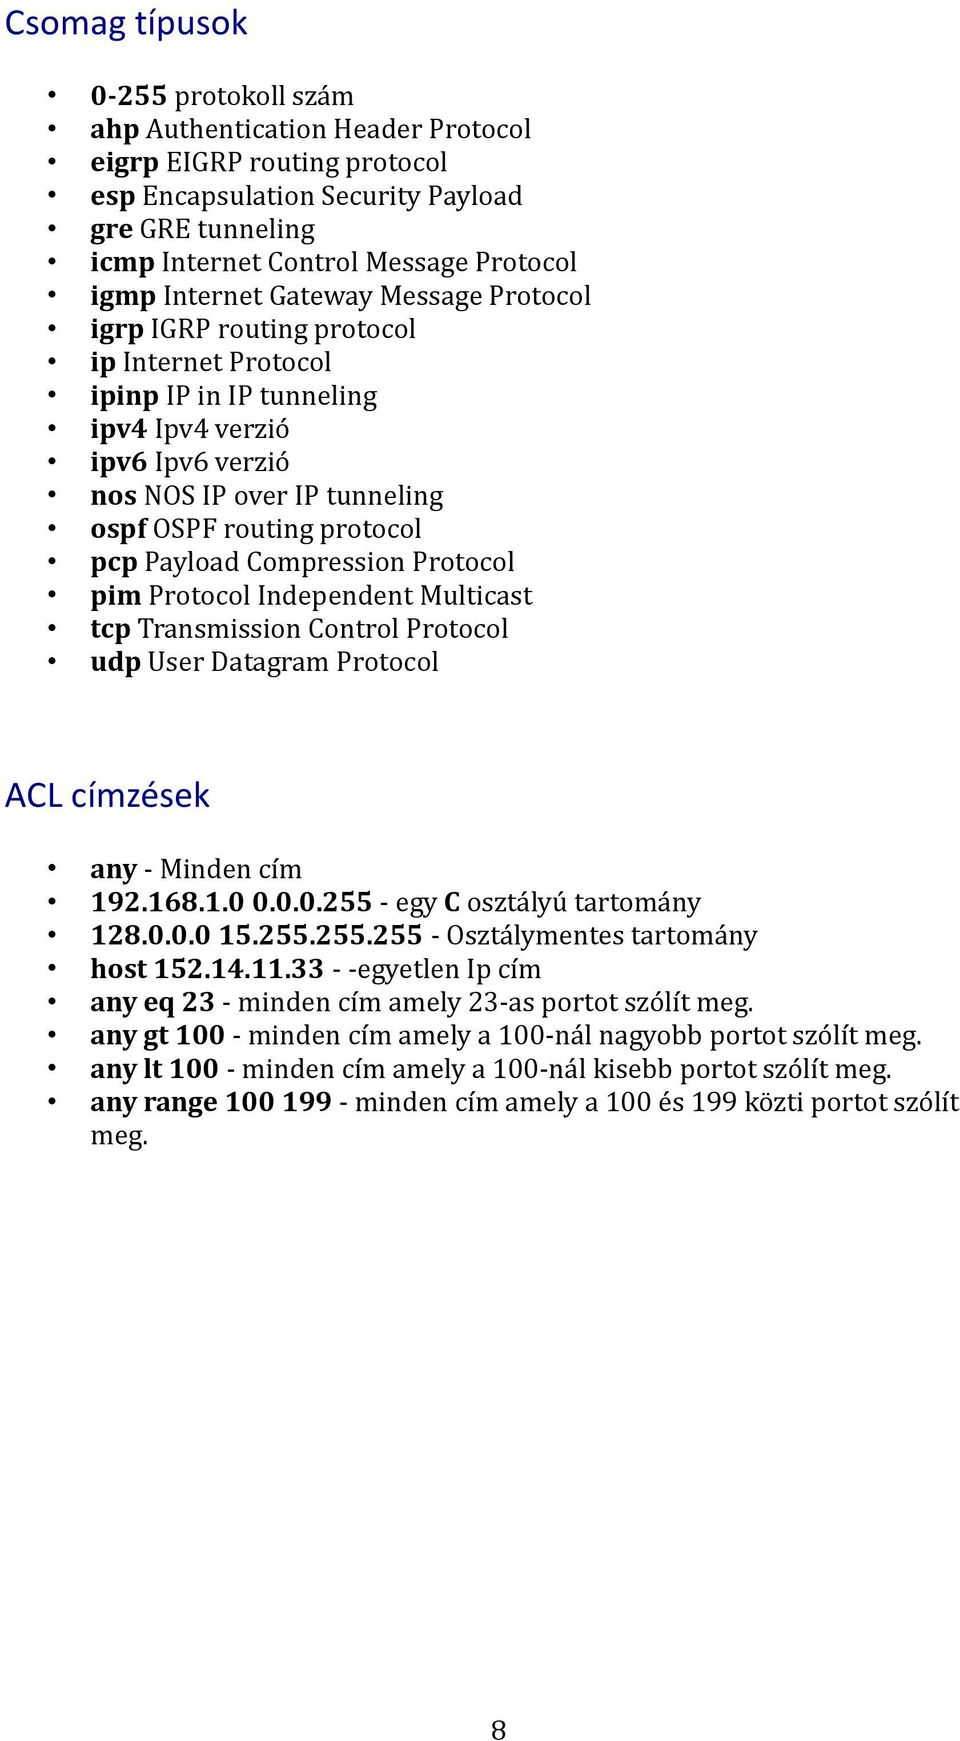 pcp Payload Compression Protocol pim Protocol Independent Multicast tcp Transmission Control Protocol udp User Datagram Protocol ACL címzések any - Minden cím 192.168.1.0 